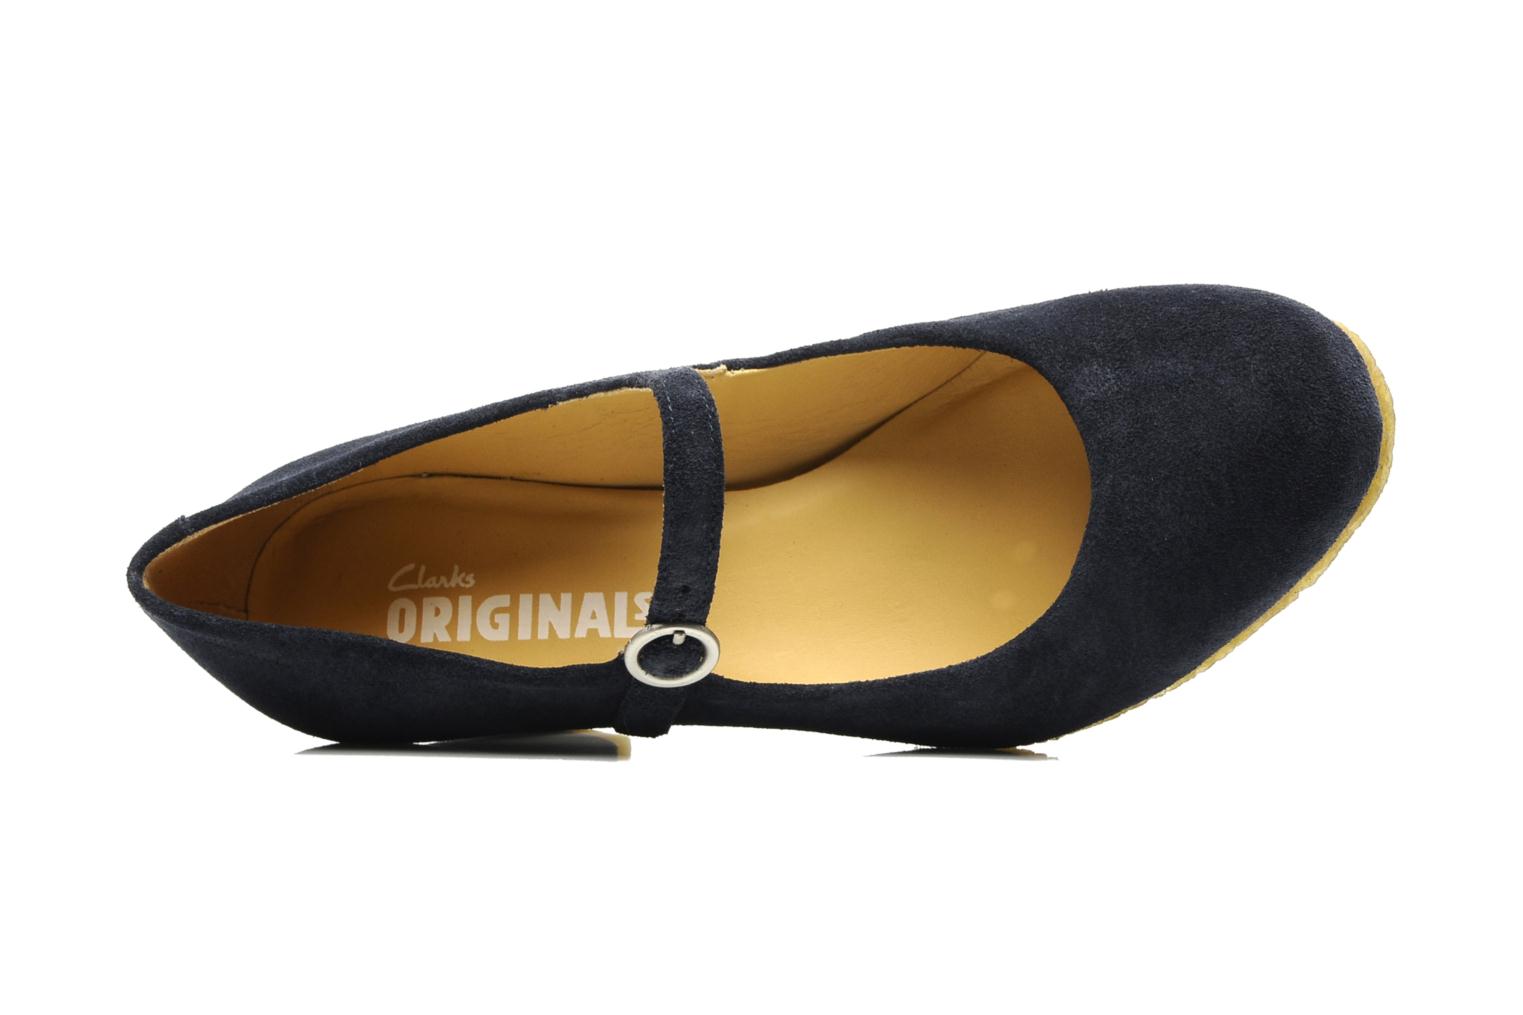 Clarks Originals Cary Jane High heels in Blue at Sarenza.co.uk (128574)